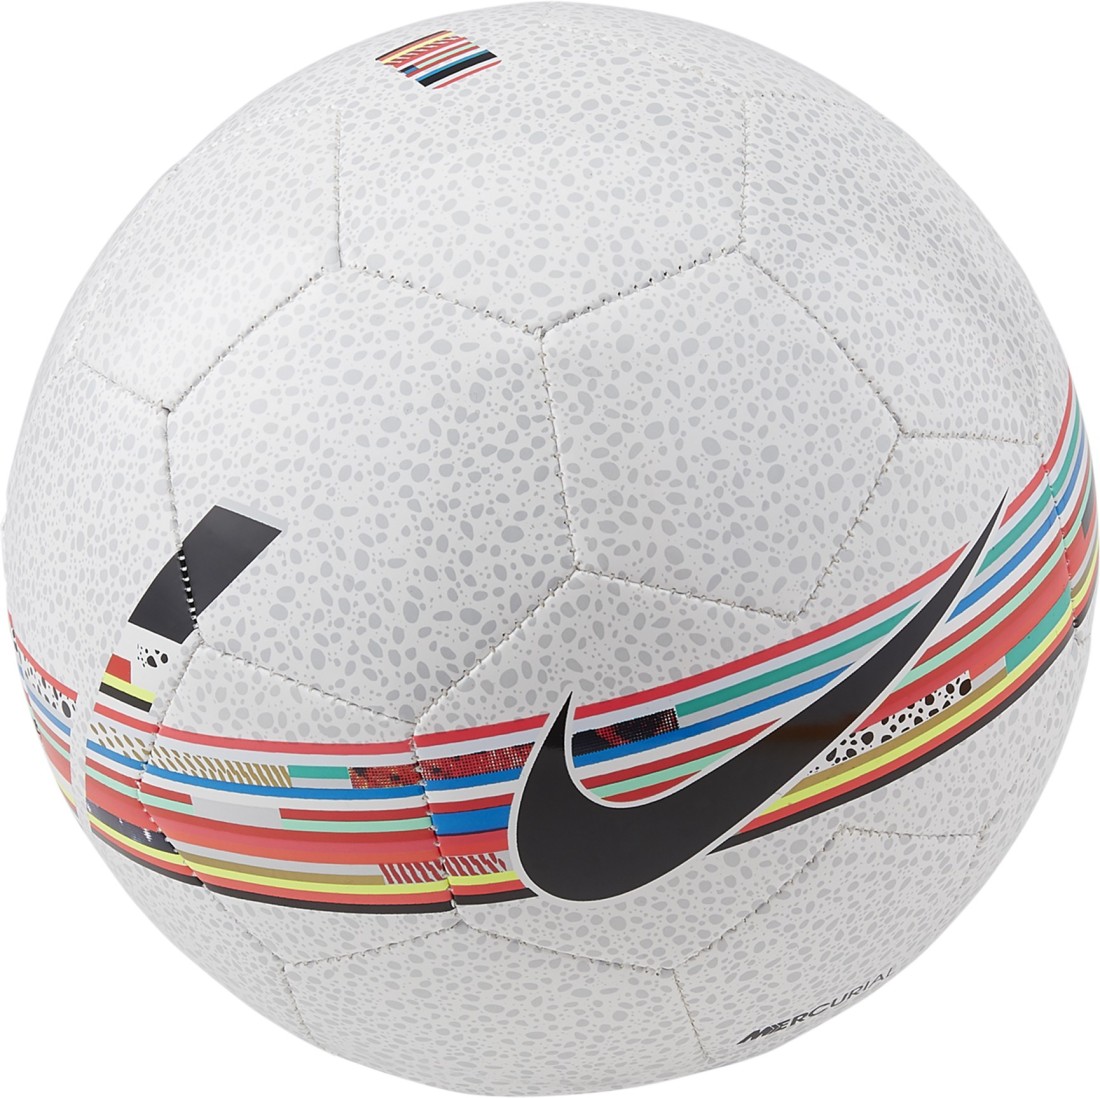 Nike CR7 Prestige Football - Size: 4 